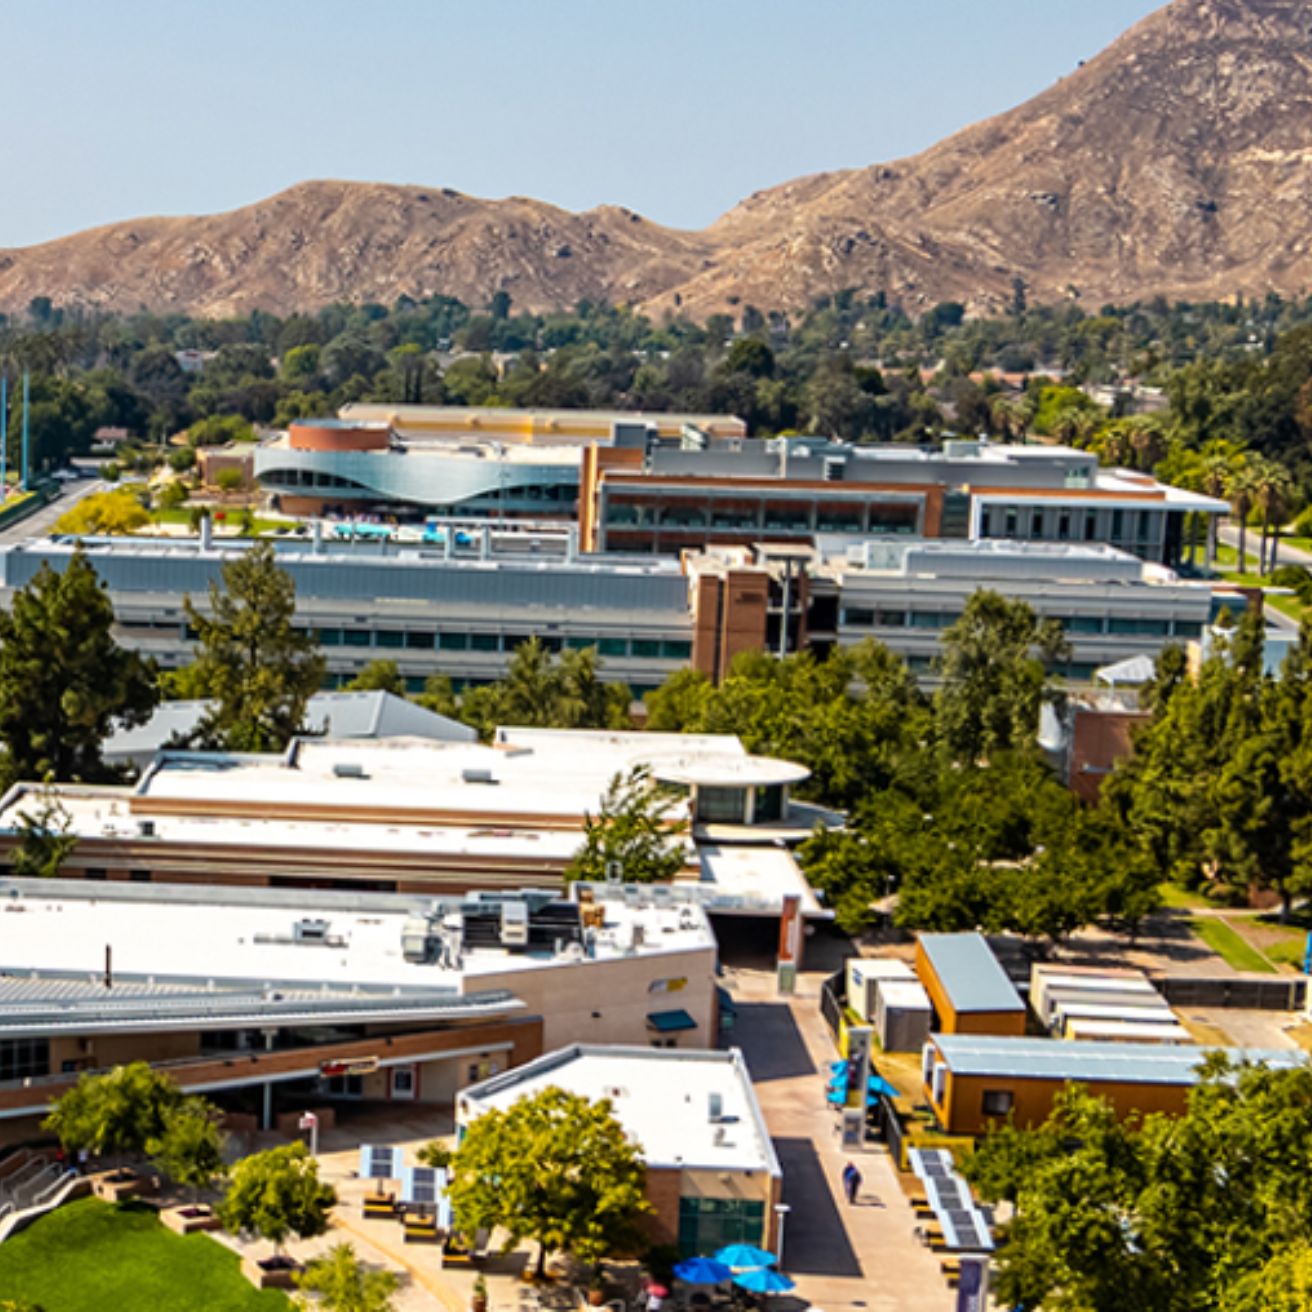 University of California, Riverside campus